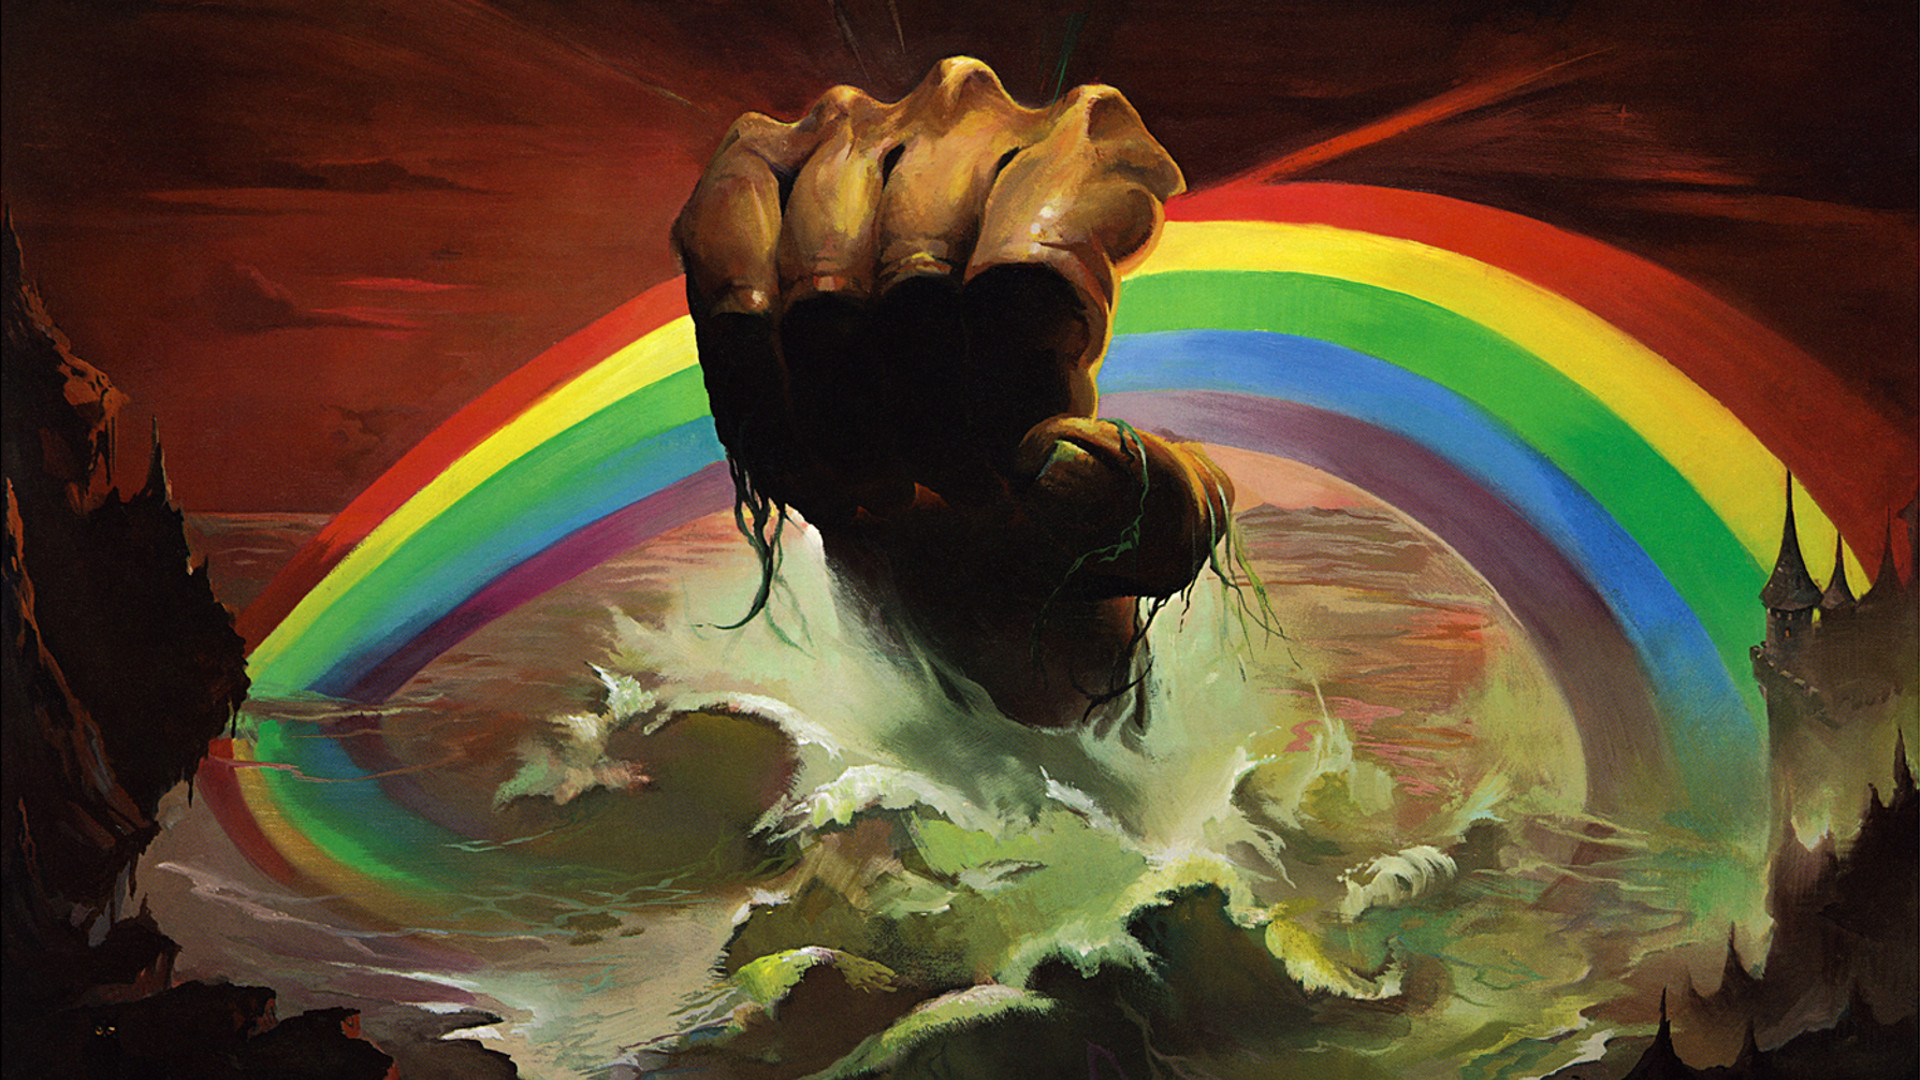 Ritchie Blackmore's Rainbow & Rising